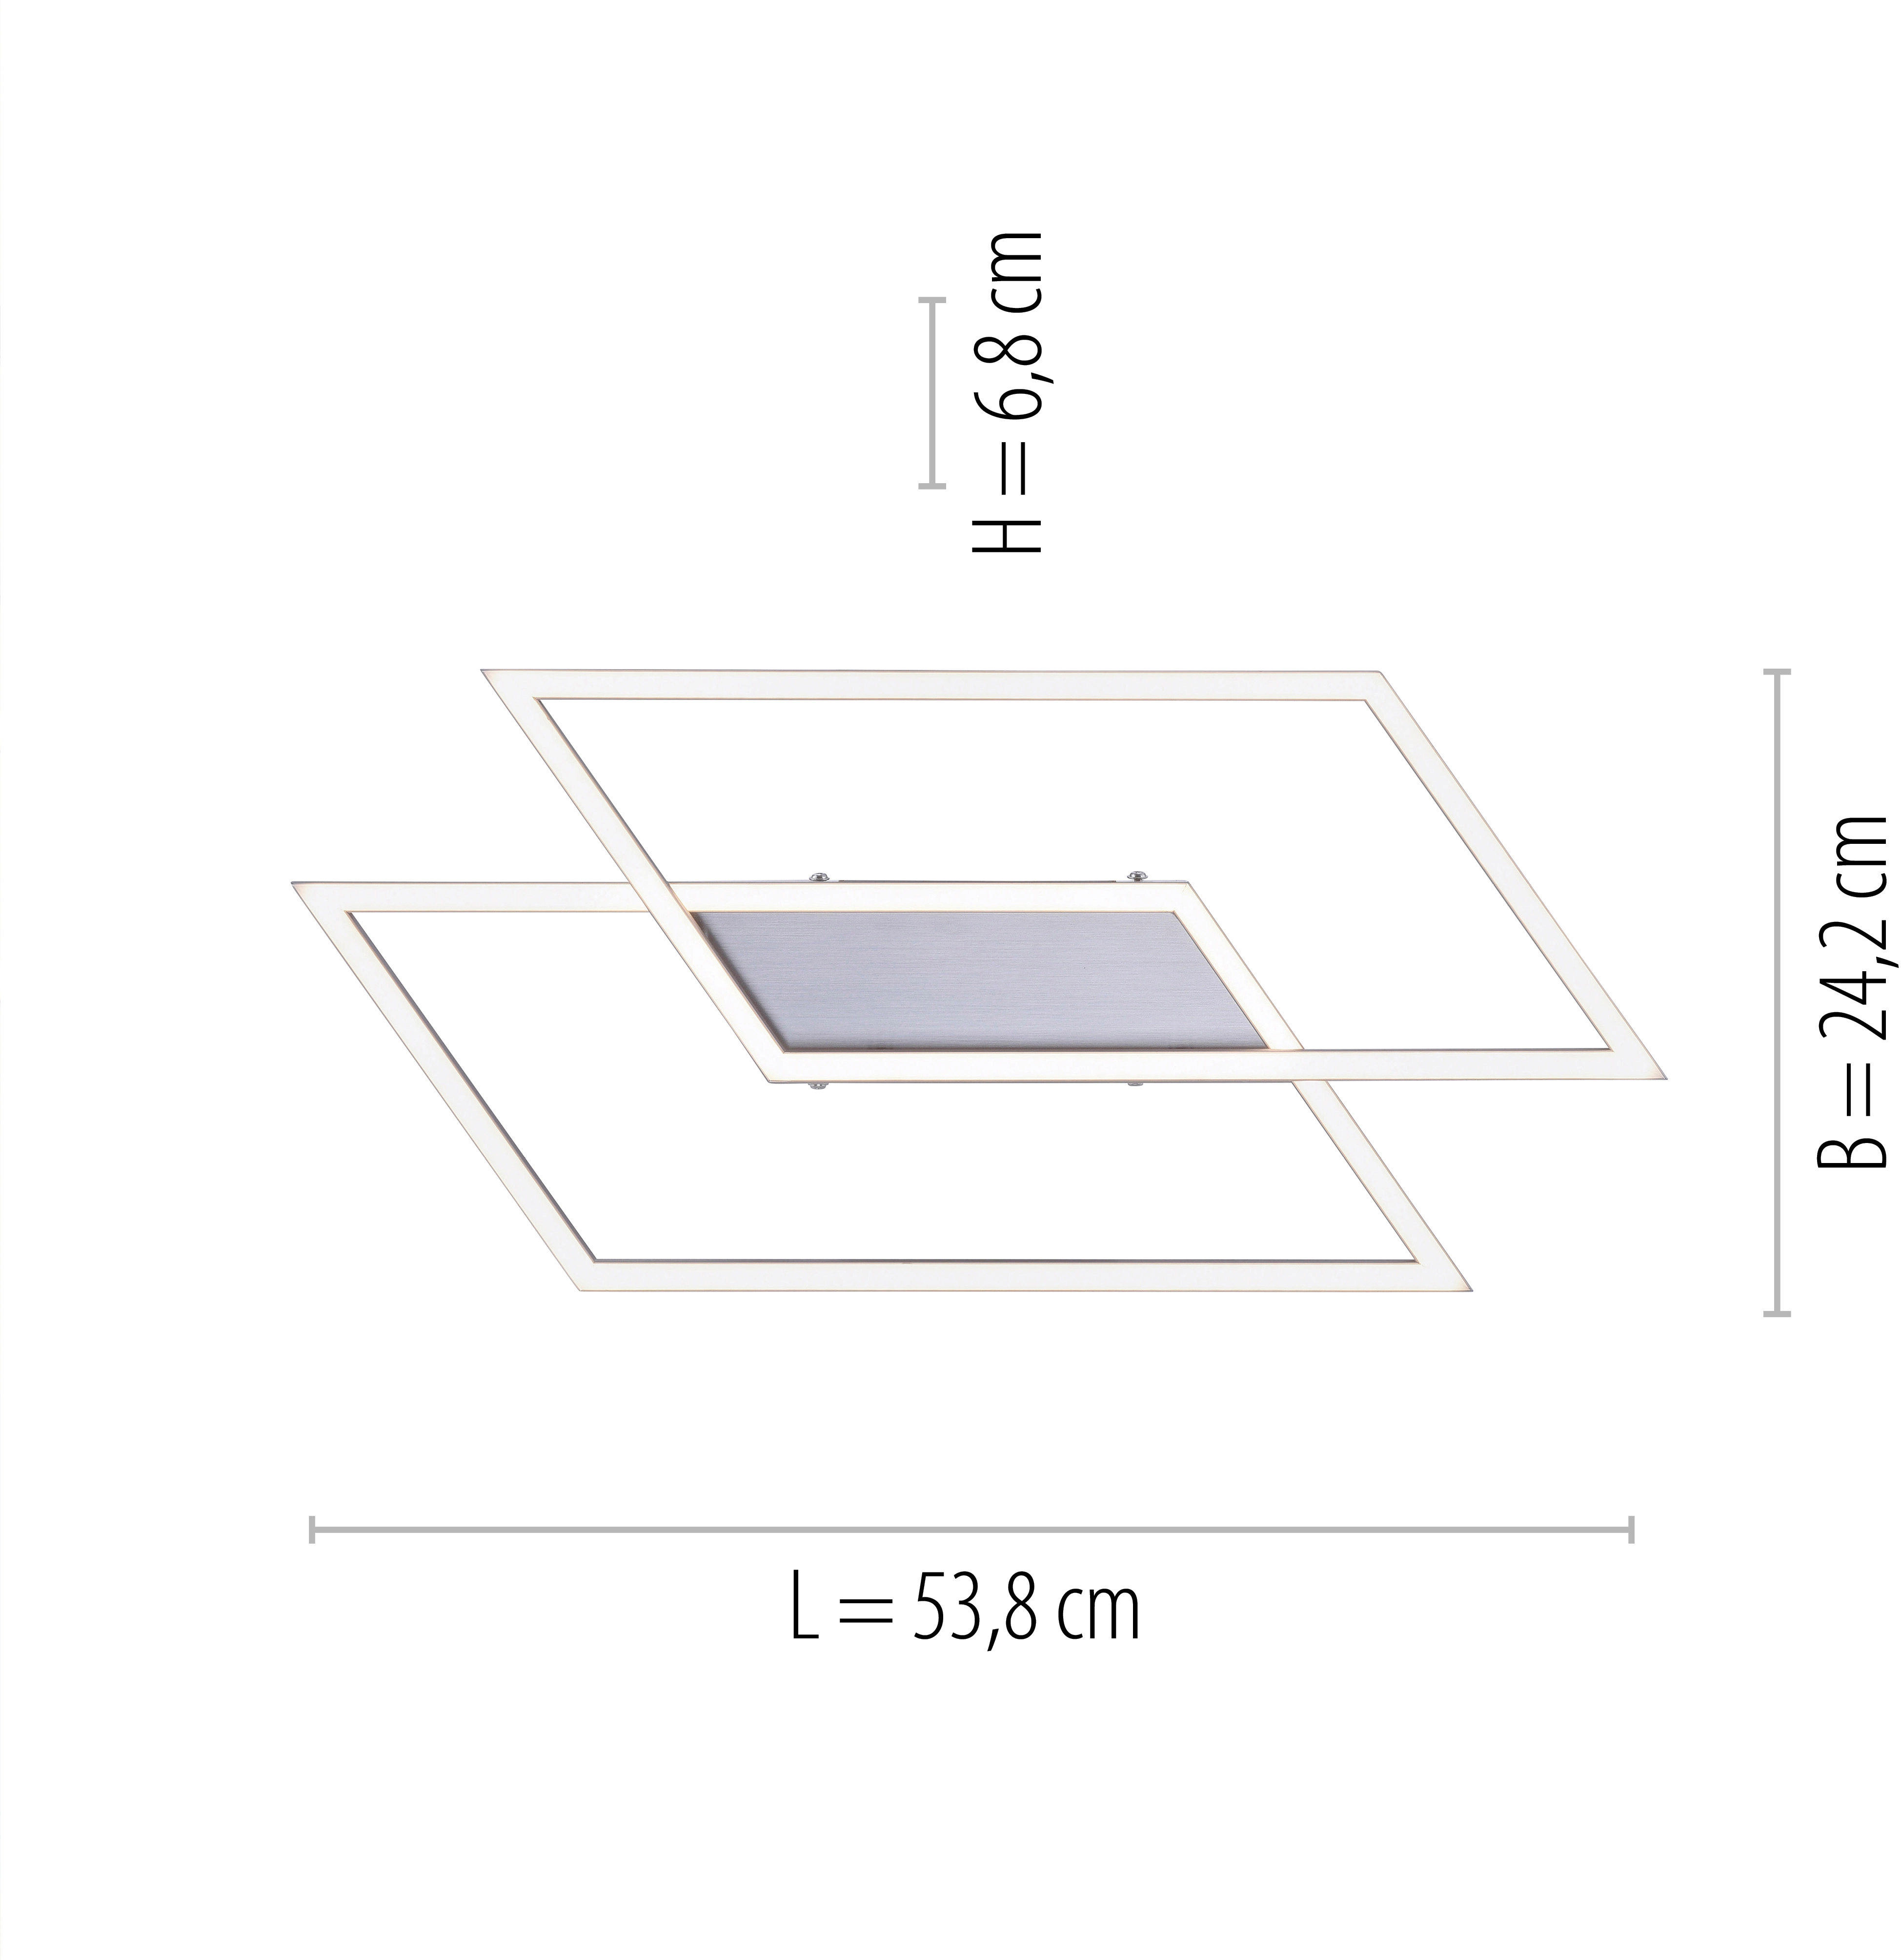 Inigo 24,2 Stahl x LED-Deckenleuchte 53,8 cm 2-flammig Paul cm Neuhaus